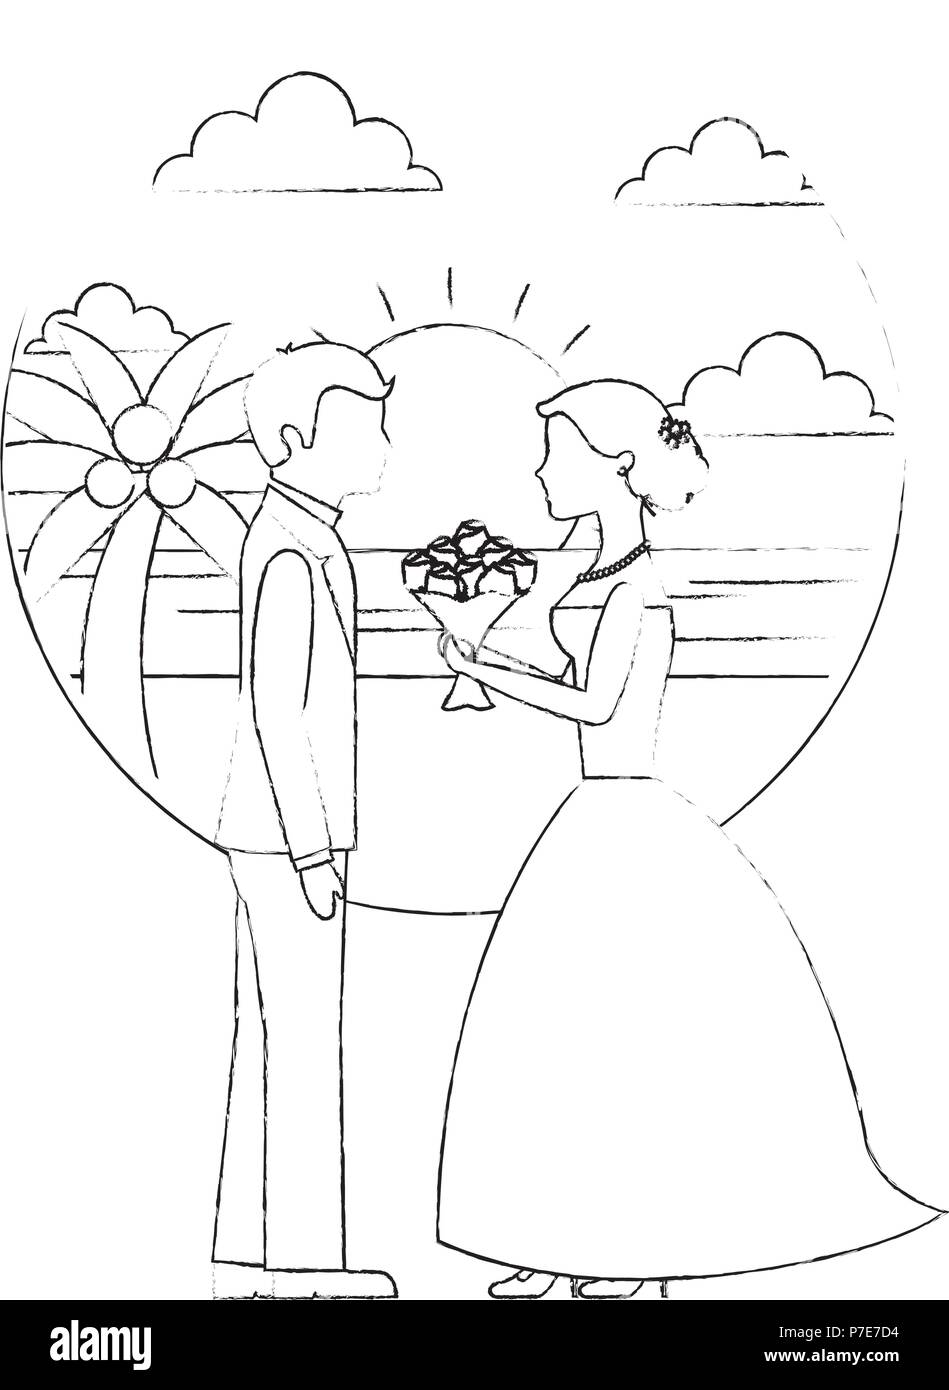 5 Ways To Chronicle Your Wedding Day  Nikkis Plate  Wedding drawing  Wedding couples Fashion illustration